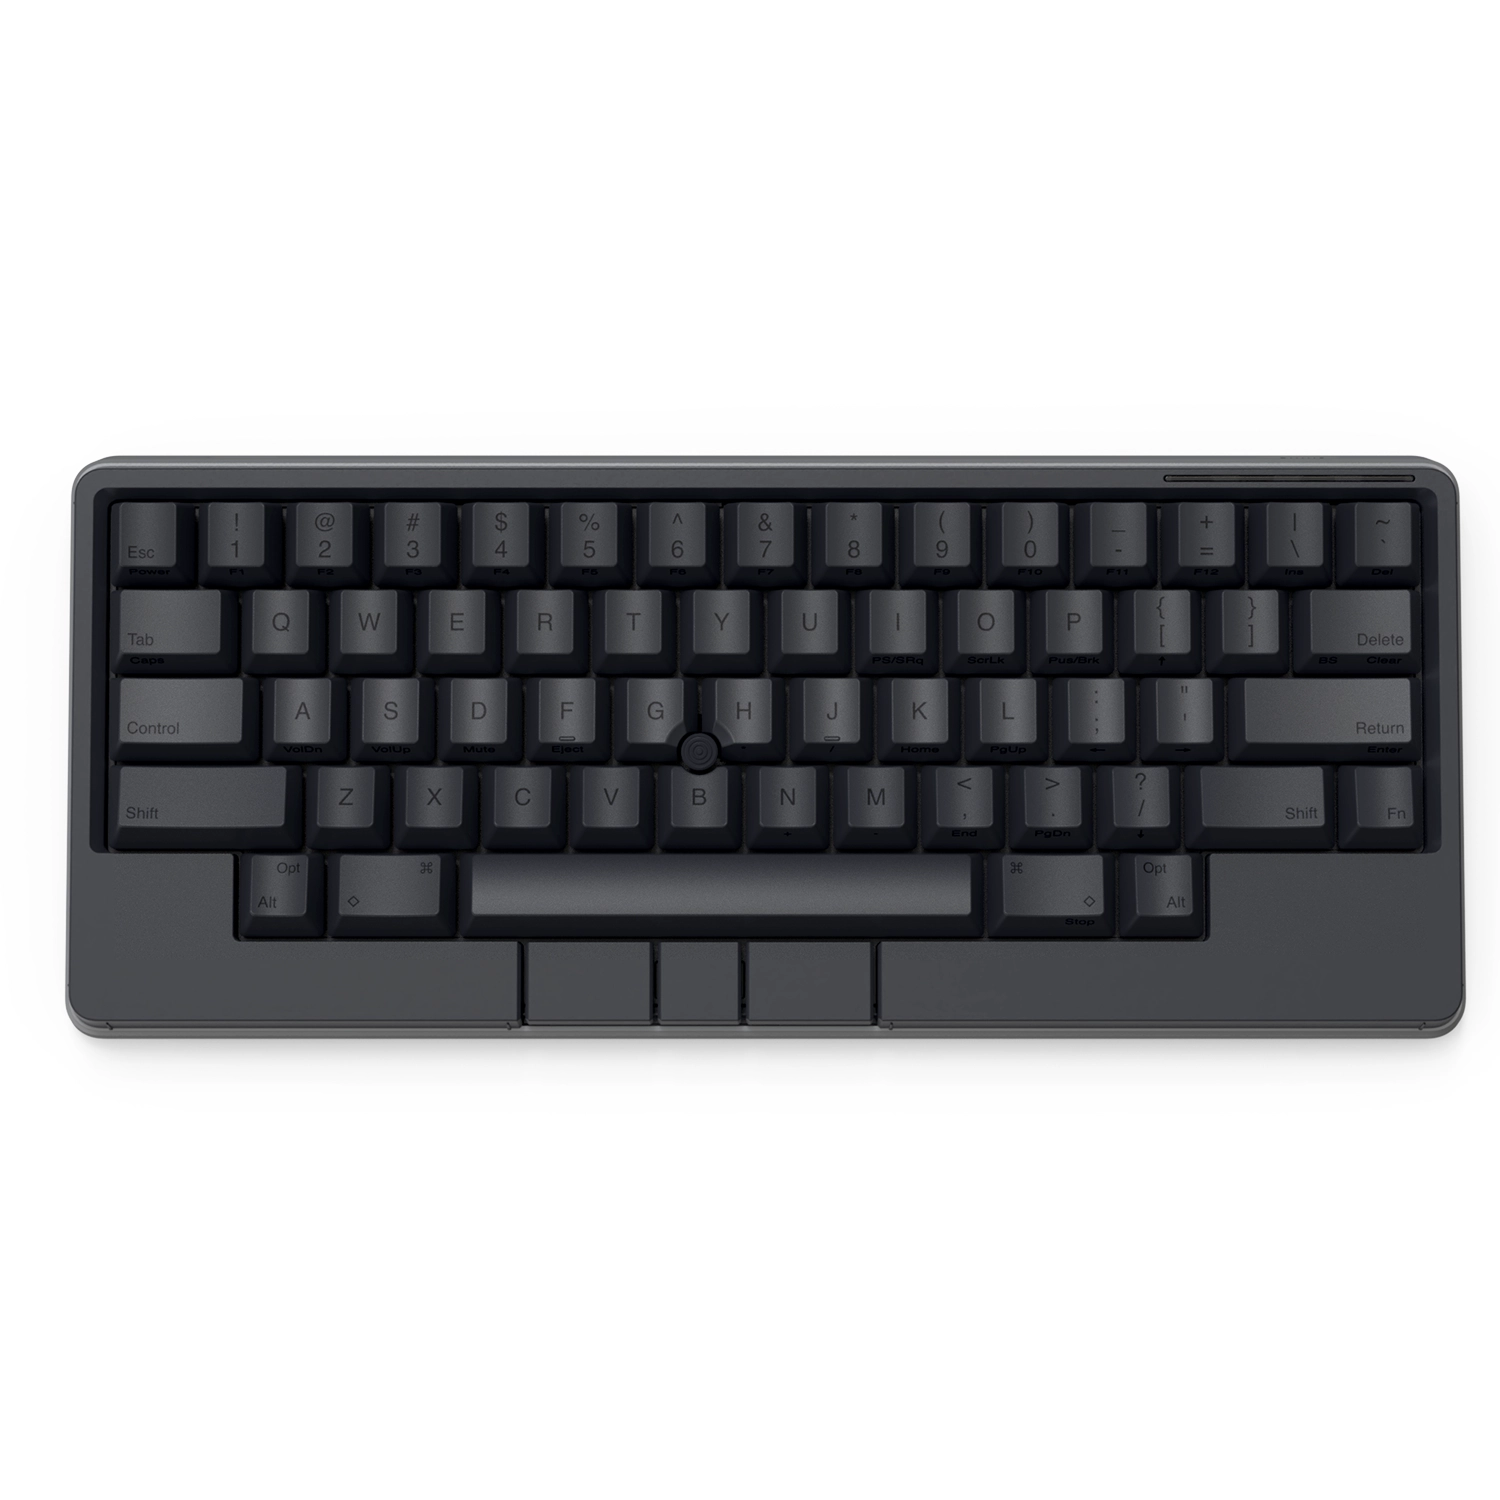 HHKB Studio keyboard in Charcoal with Printed Keycaps